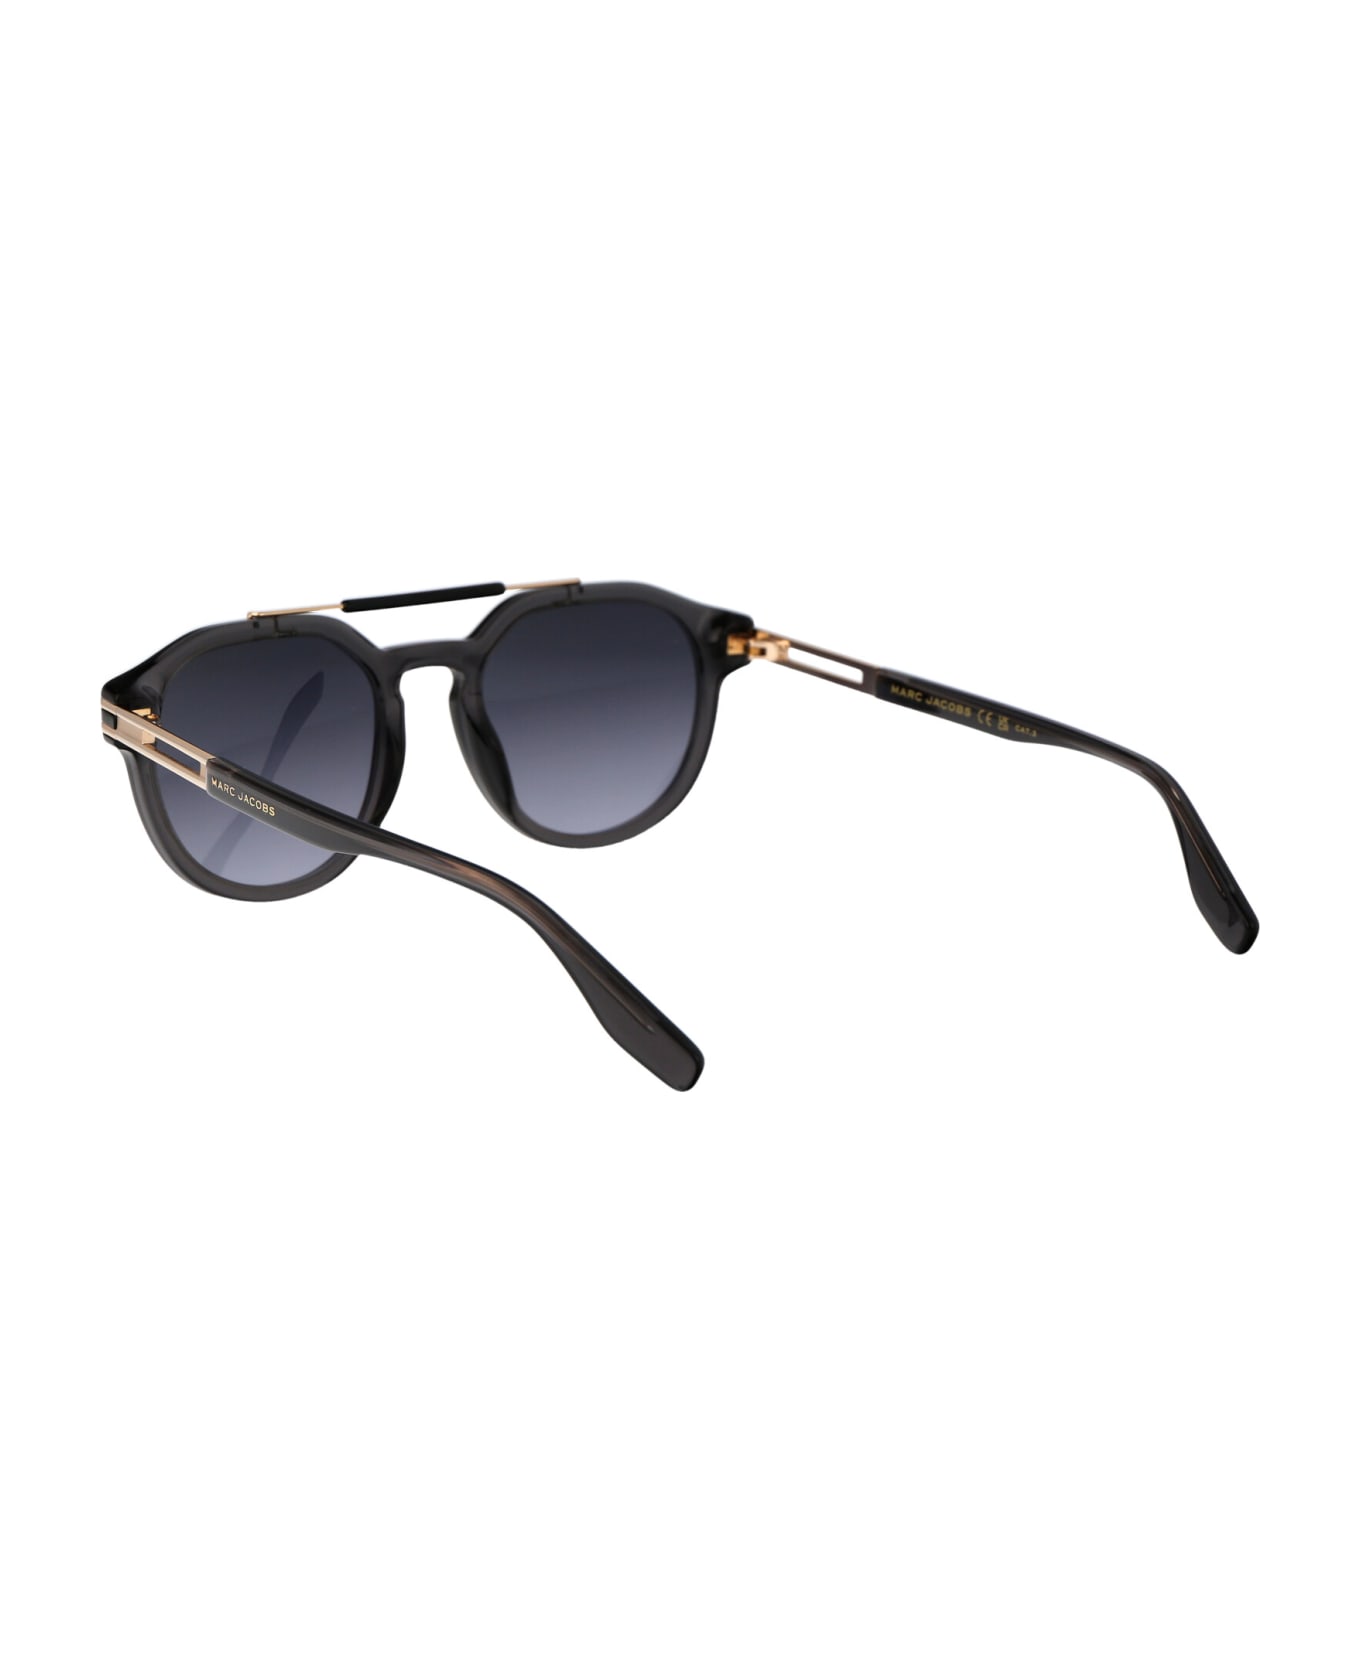 Marc Jacobs Eyewear Marc 675/s Sunglasses - FT39O GREY GOLD